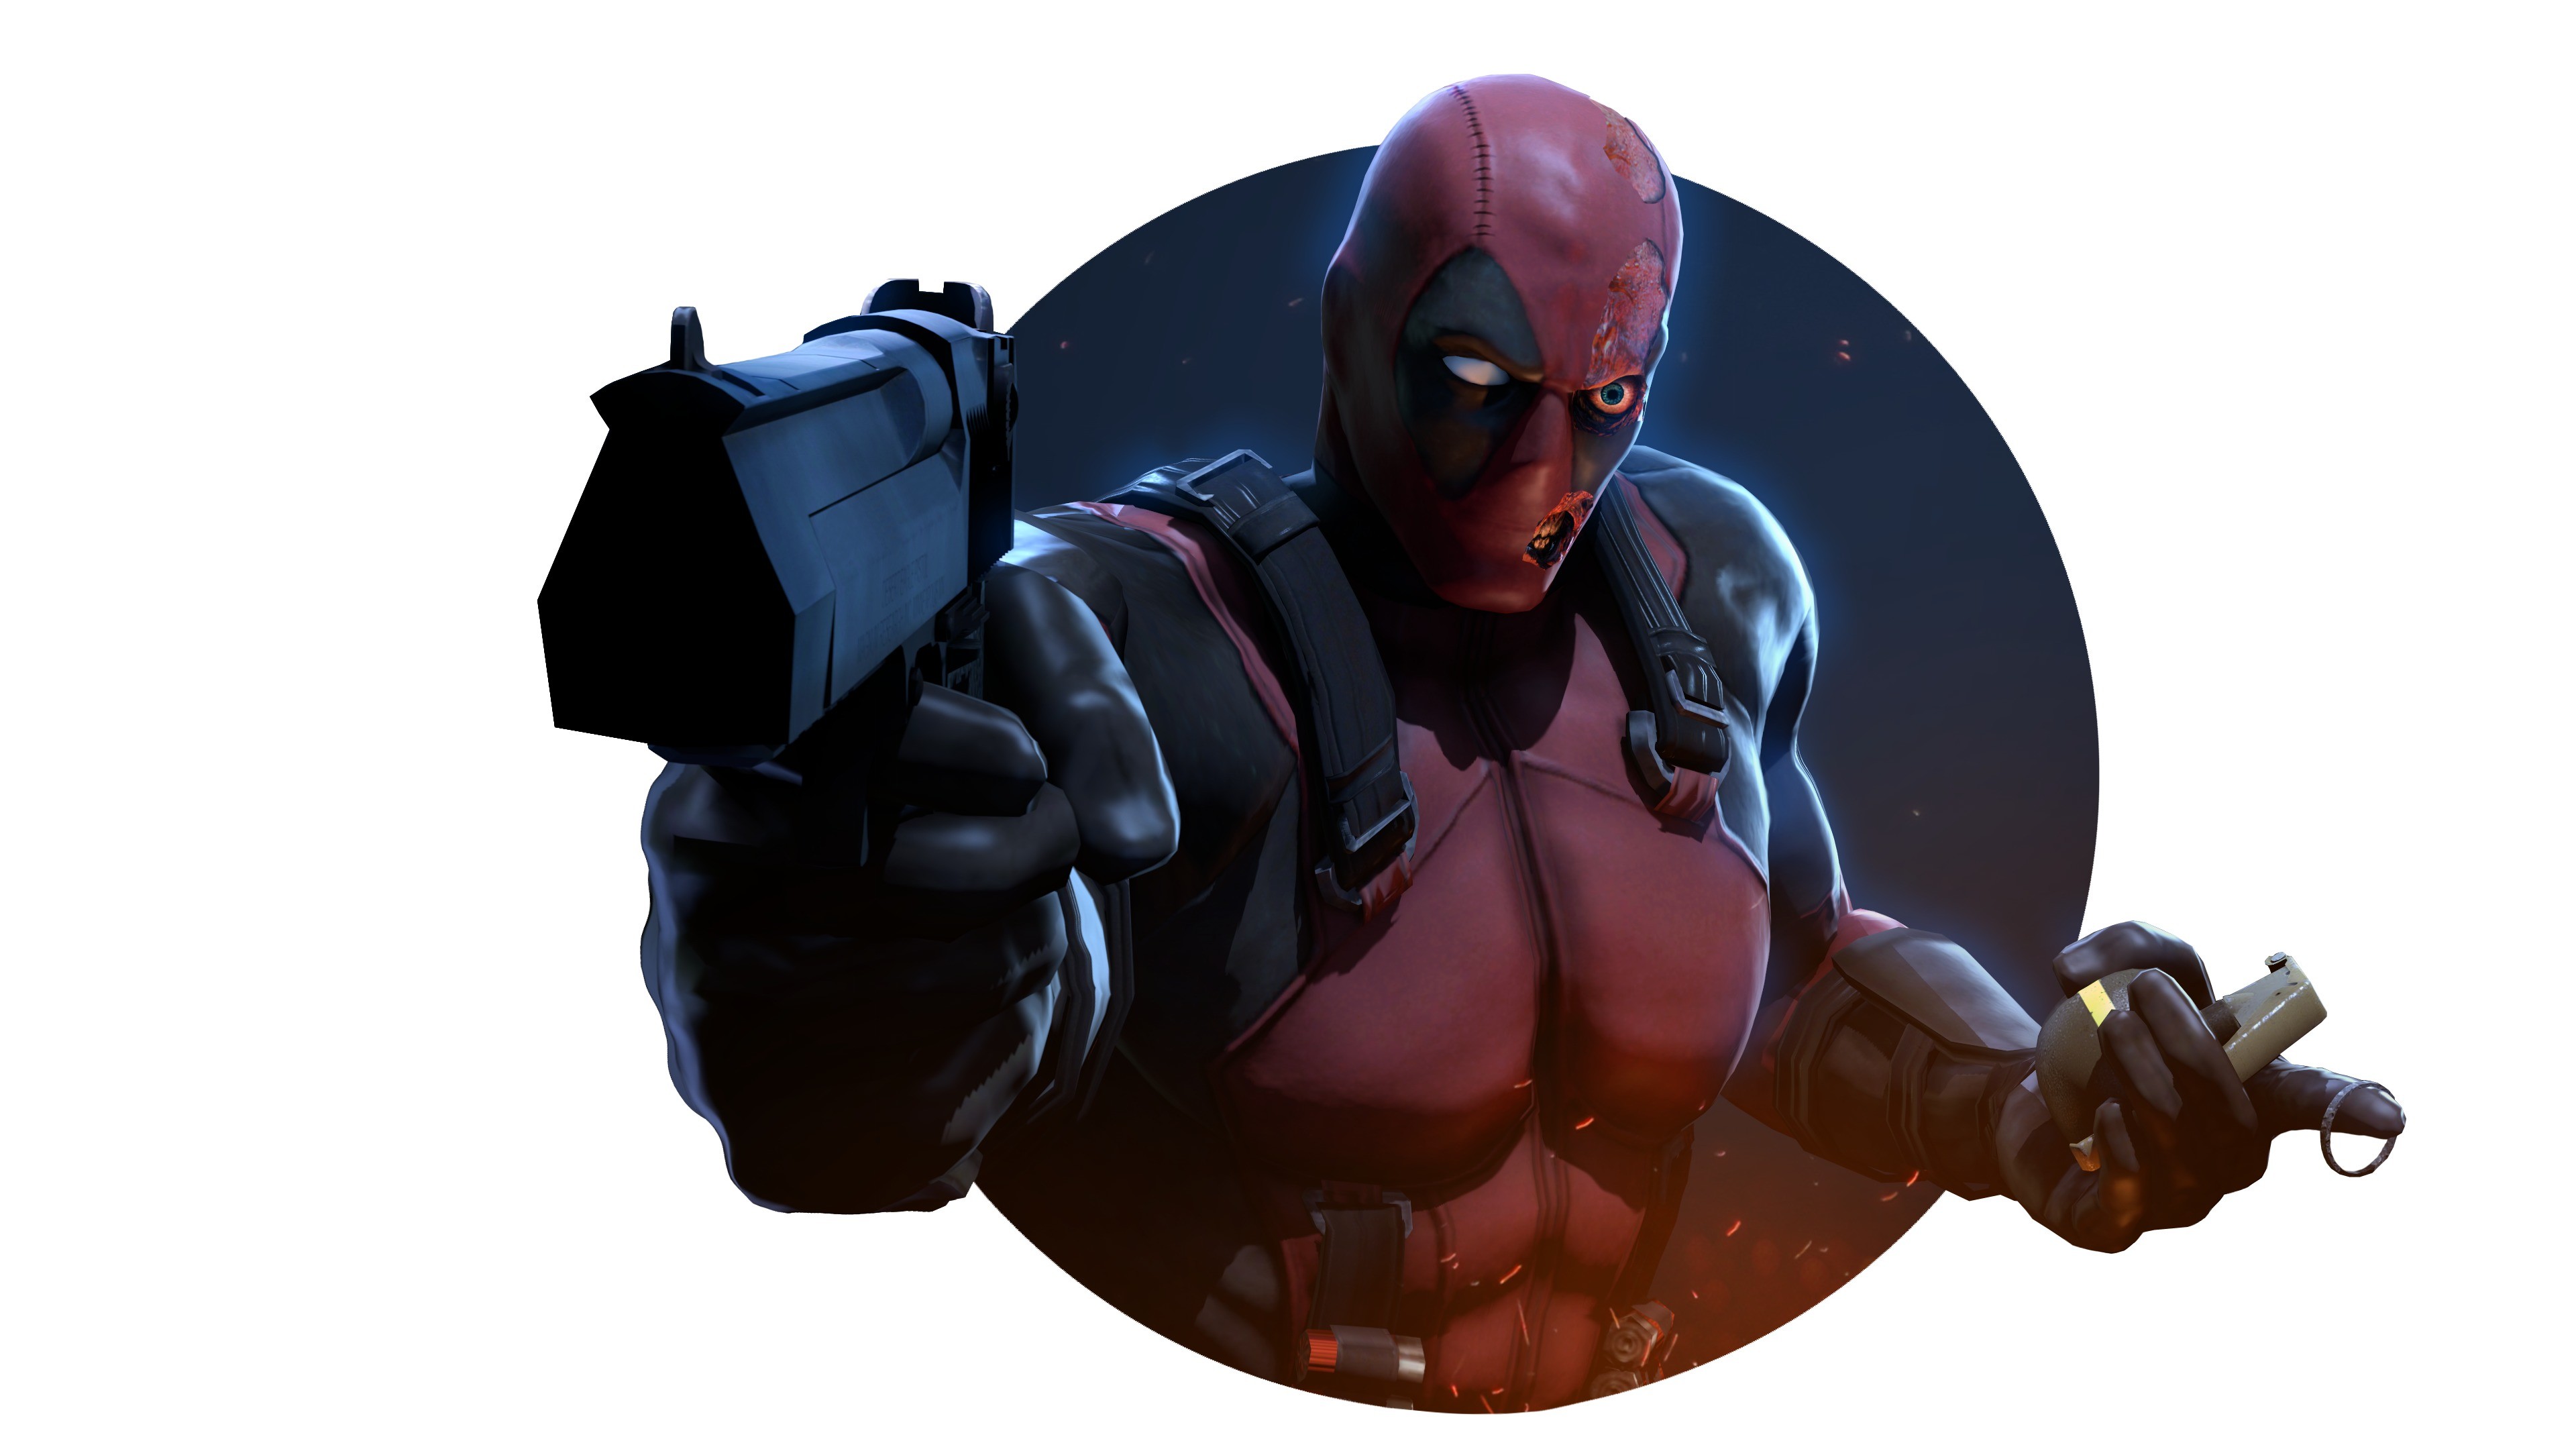 General 3840x2160 Deadpool Marvel Comics gun antiheroes white background simple background aiming grenades weapon